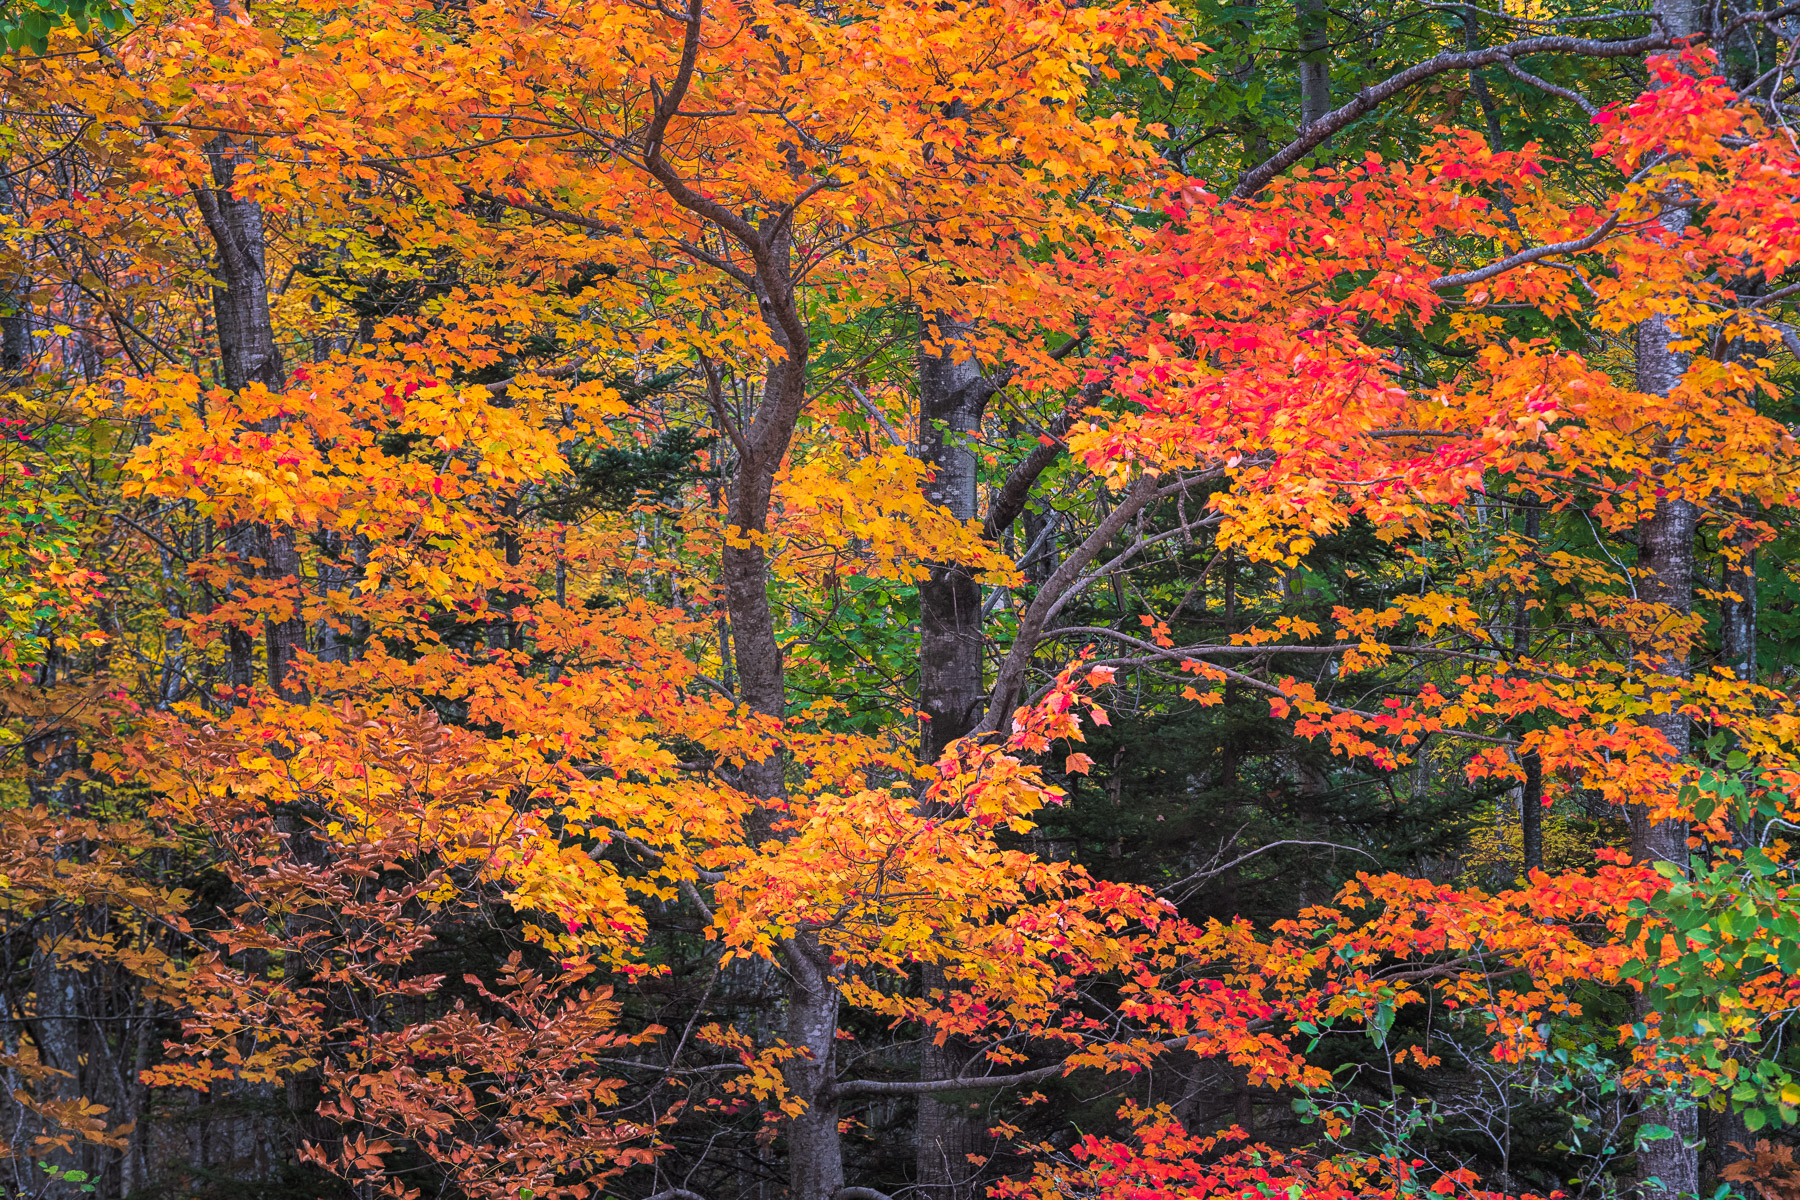 Peak autumn maples from Acadia National Park, Maine.